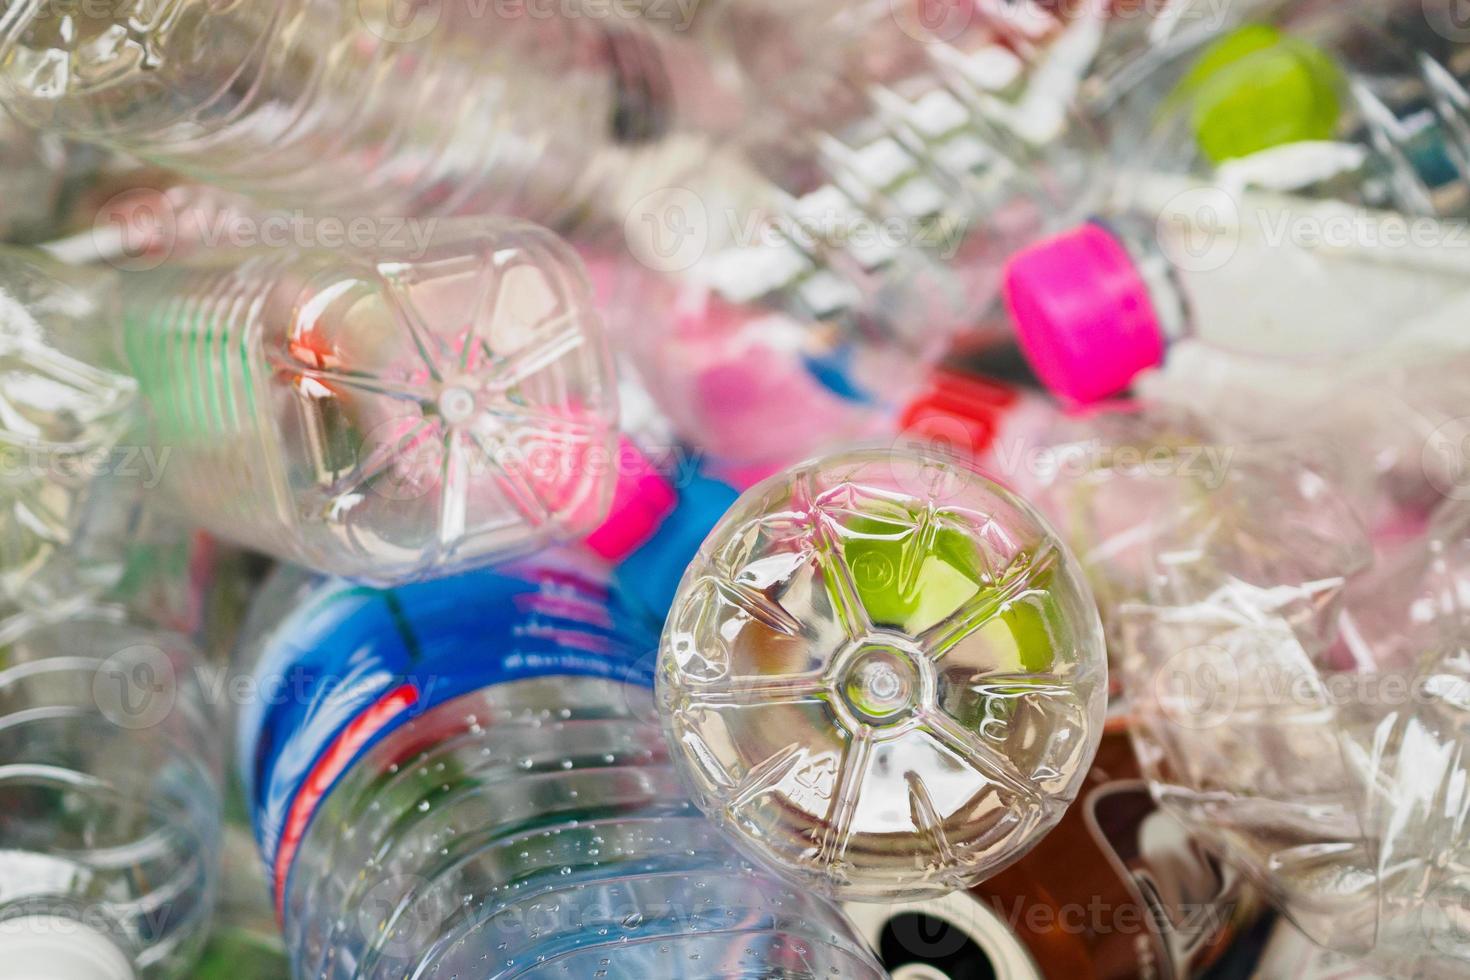 plastic flessen in recycle uitschot station foto